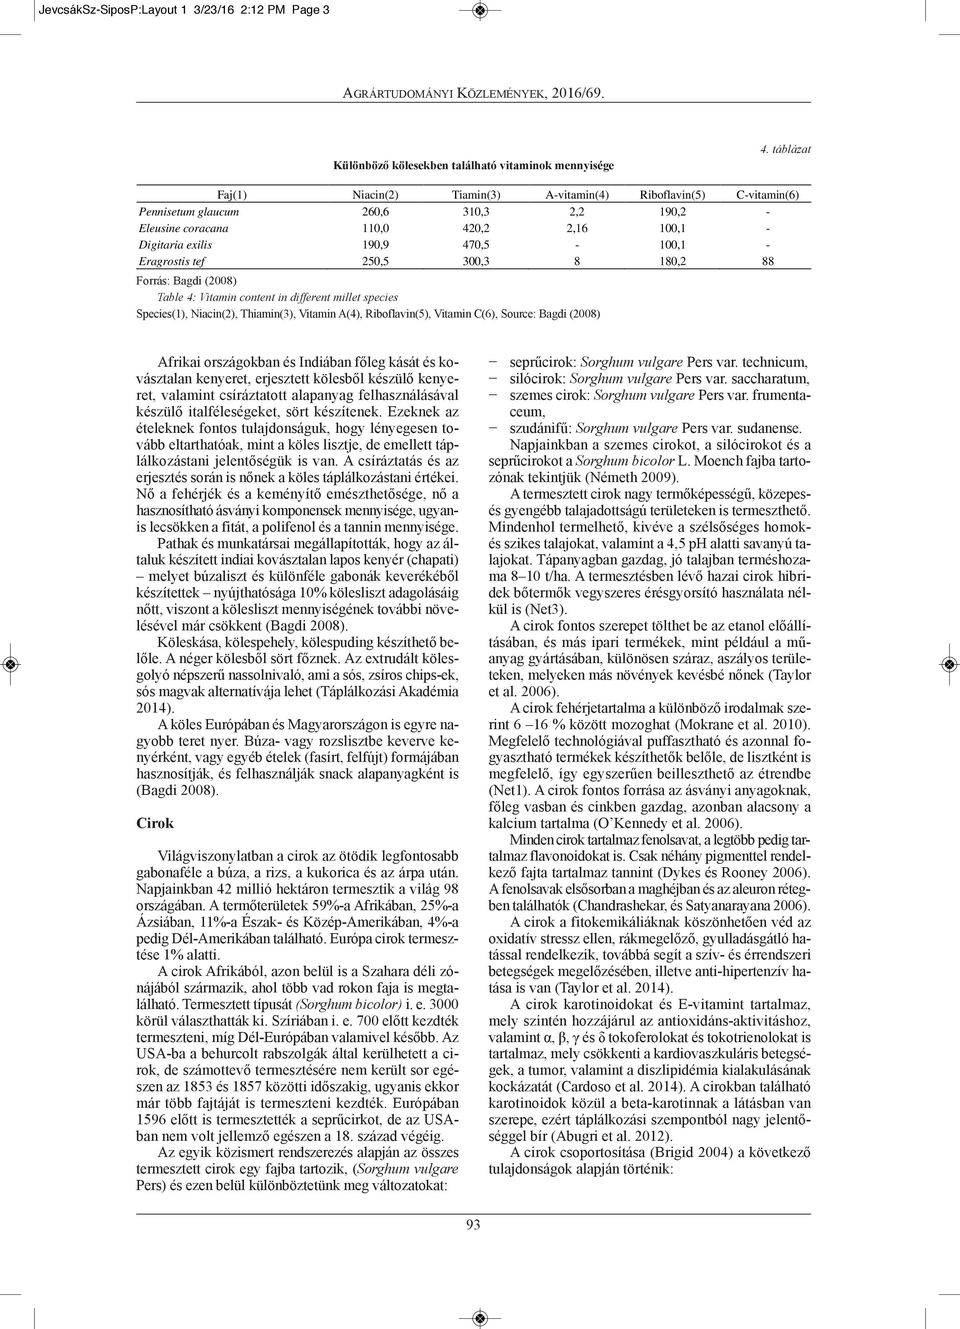 Eragrostis tef 250,5 300,3 8 180,2 88 Table 4: Vitamin content in different millet species Species(1), niacin(2), Thiamin(3), Vitamin A(4), riboflavin(5), Vitamin C(6), Source: Bagdi (2008) Afrikai